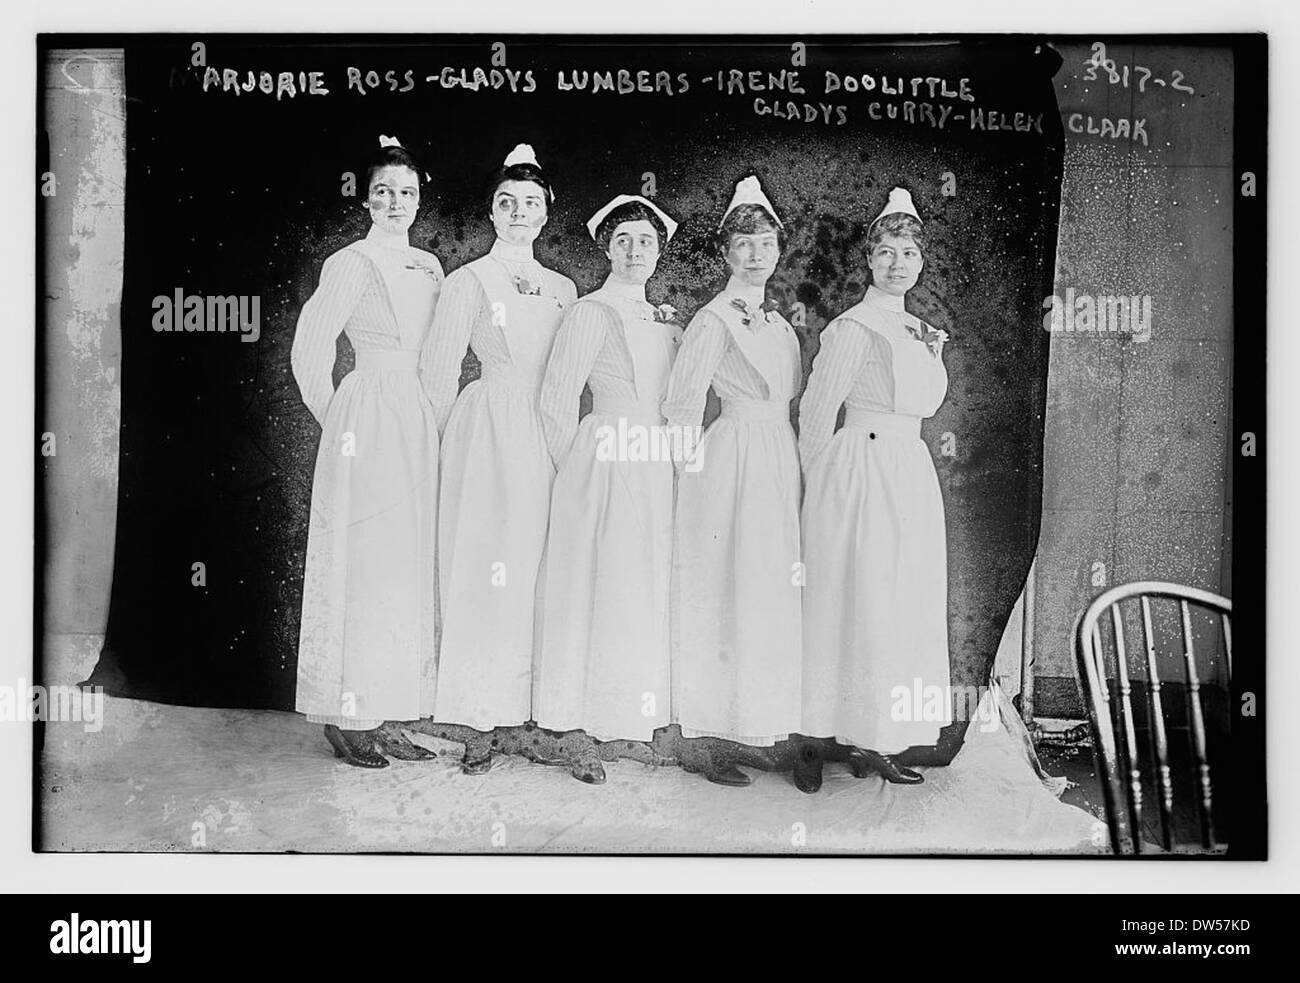 Marjorie Ross, Gladys Lumbers, Irene Doolittle, Gladys Curry, Helen Clark (LOC) Stock Photo